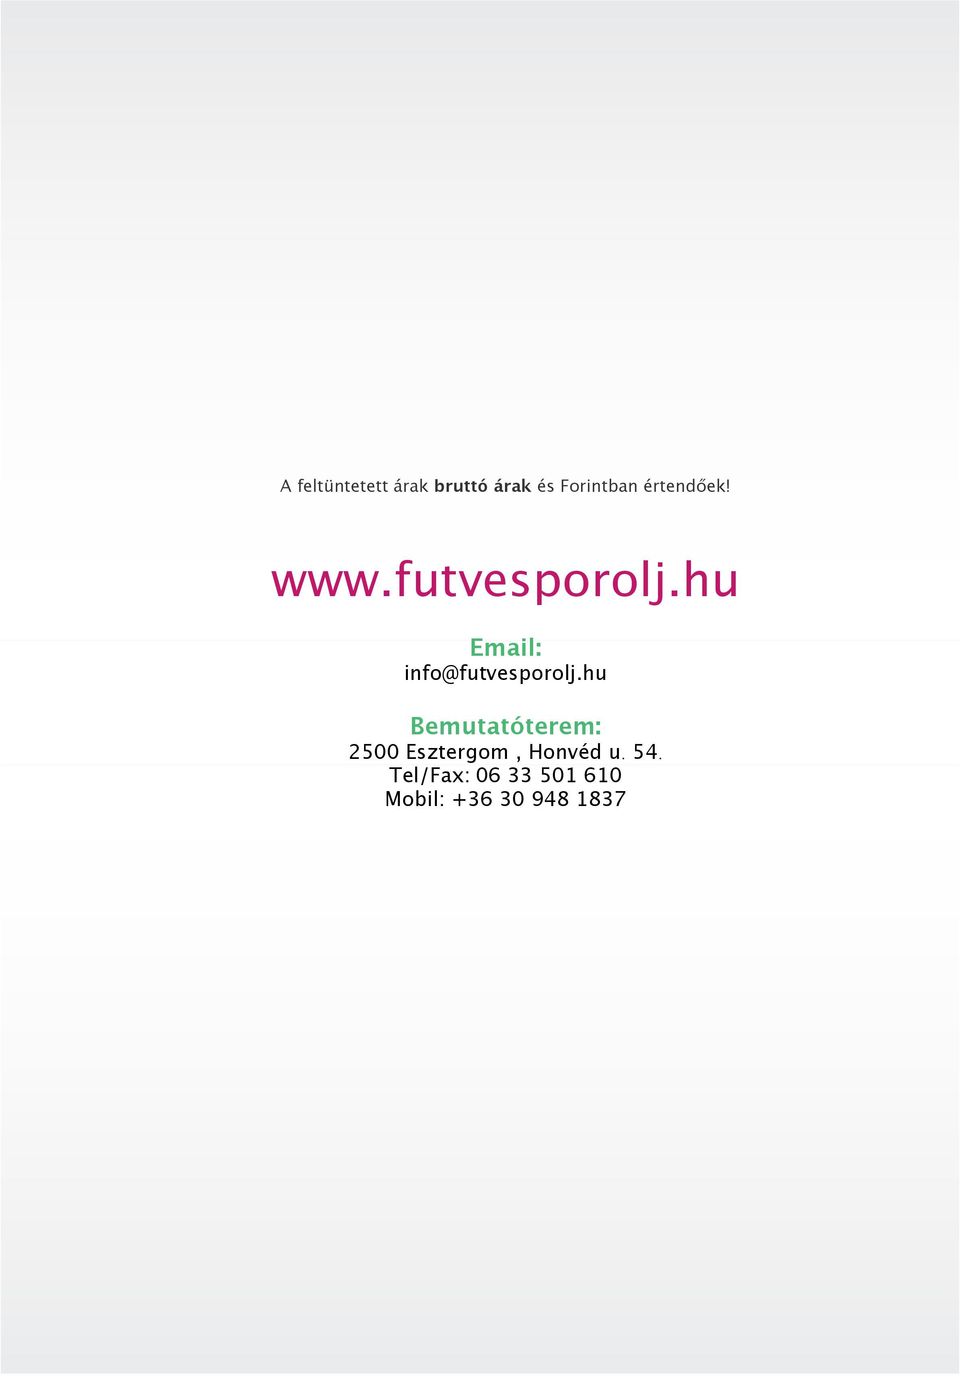 hu Email: info@futvesporolj.